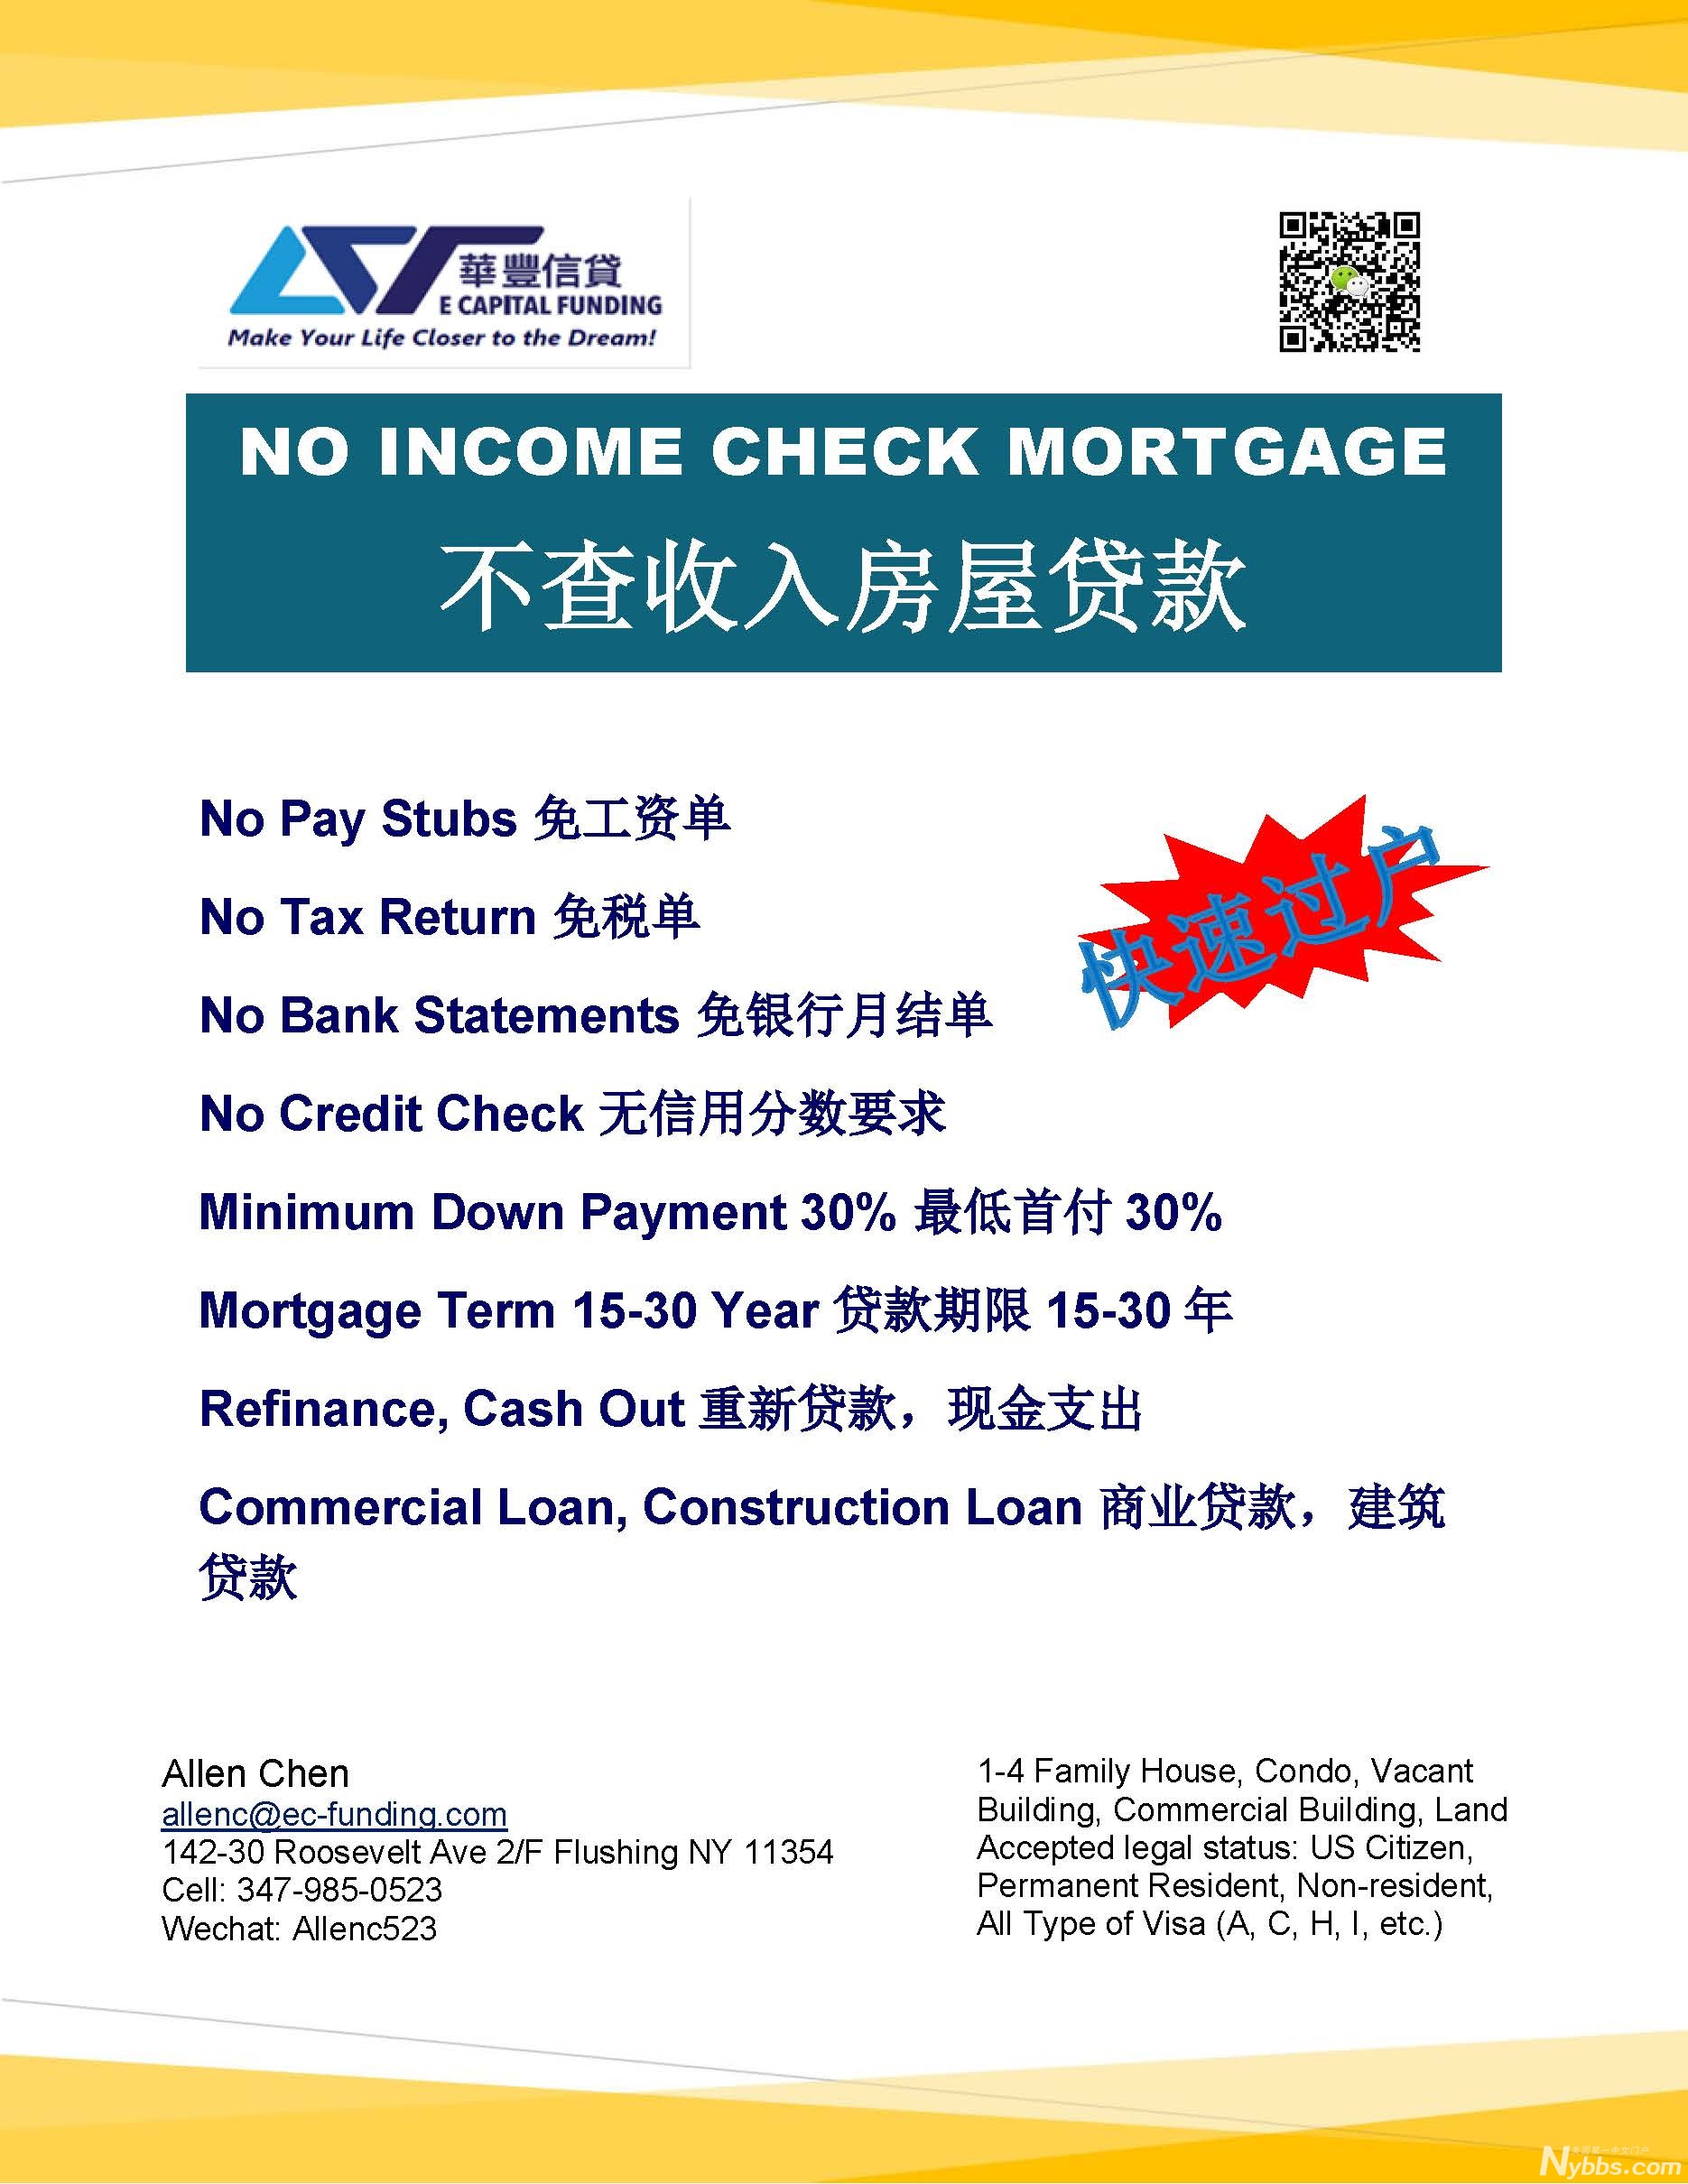 No income check mortgage 2.jpg